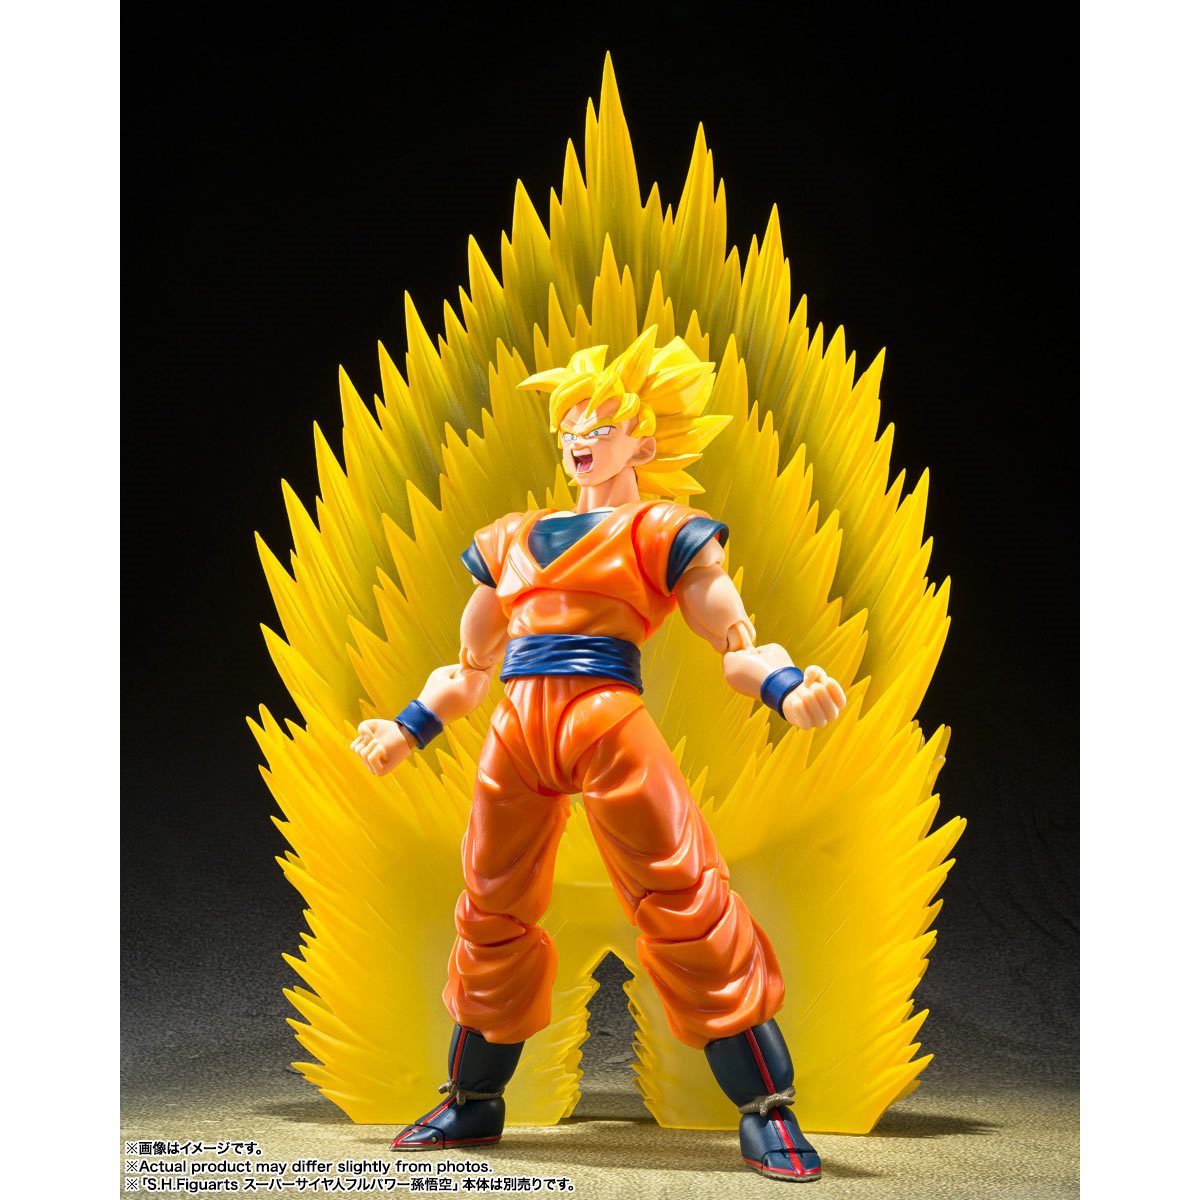 Bandai Tamashii Nations S.H. Figuarts Super Saiyan 3 Son Goku Dragon Ball Z  Action Figure 